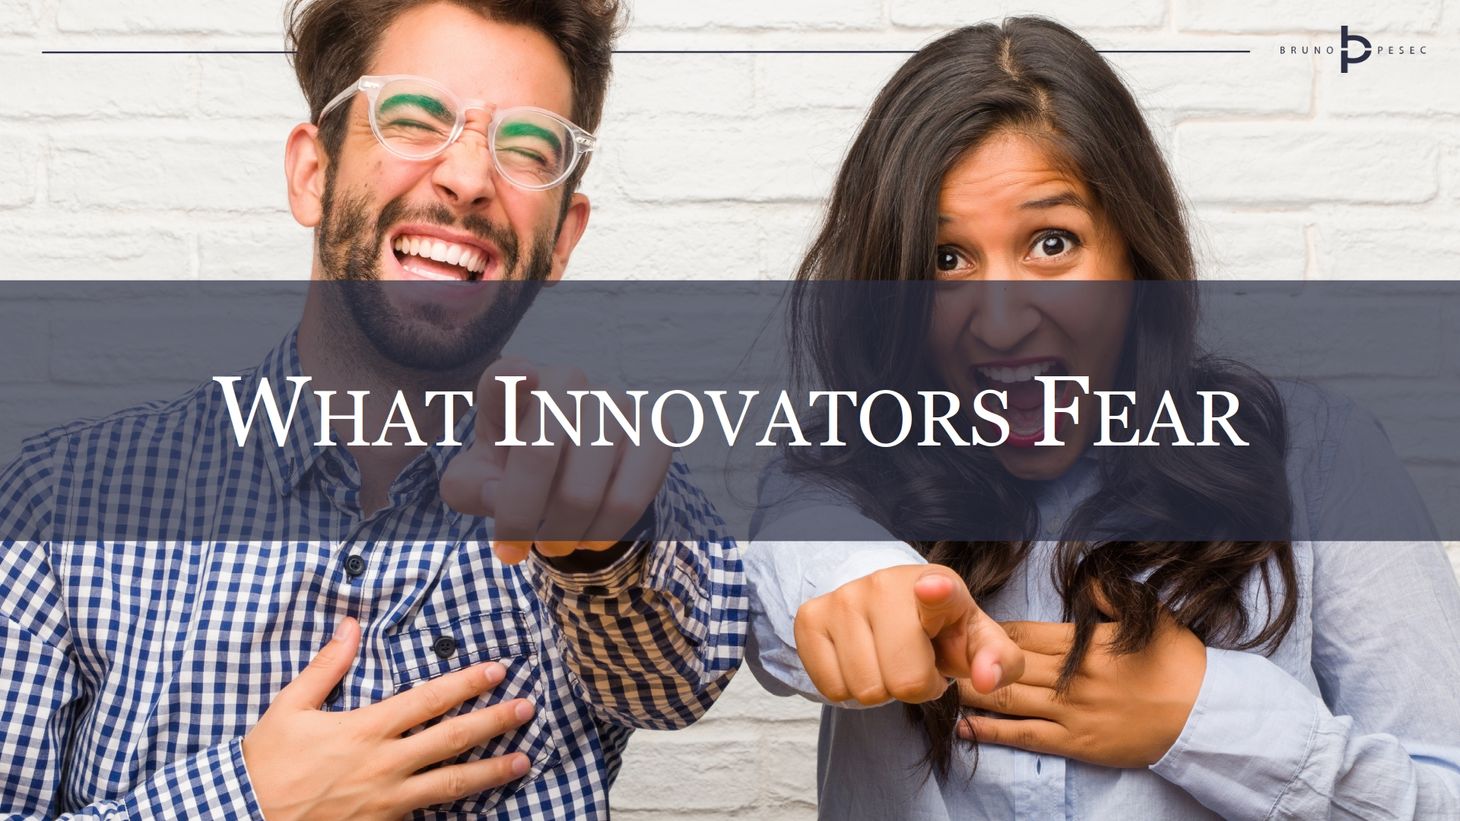 What innovators fear